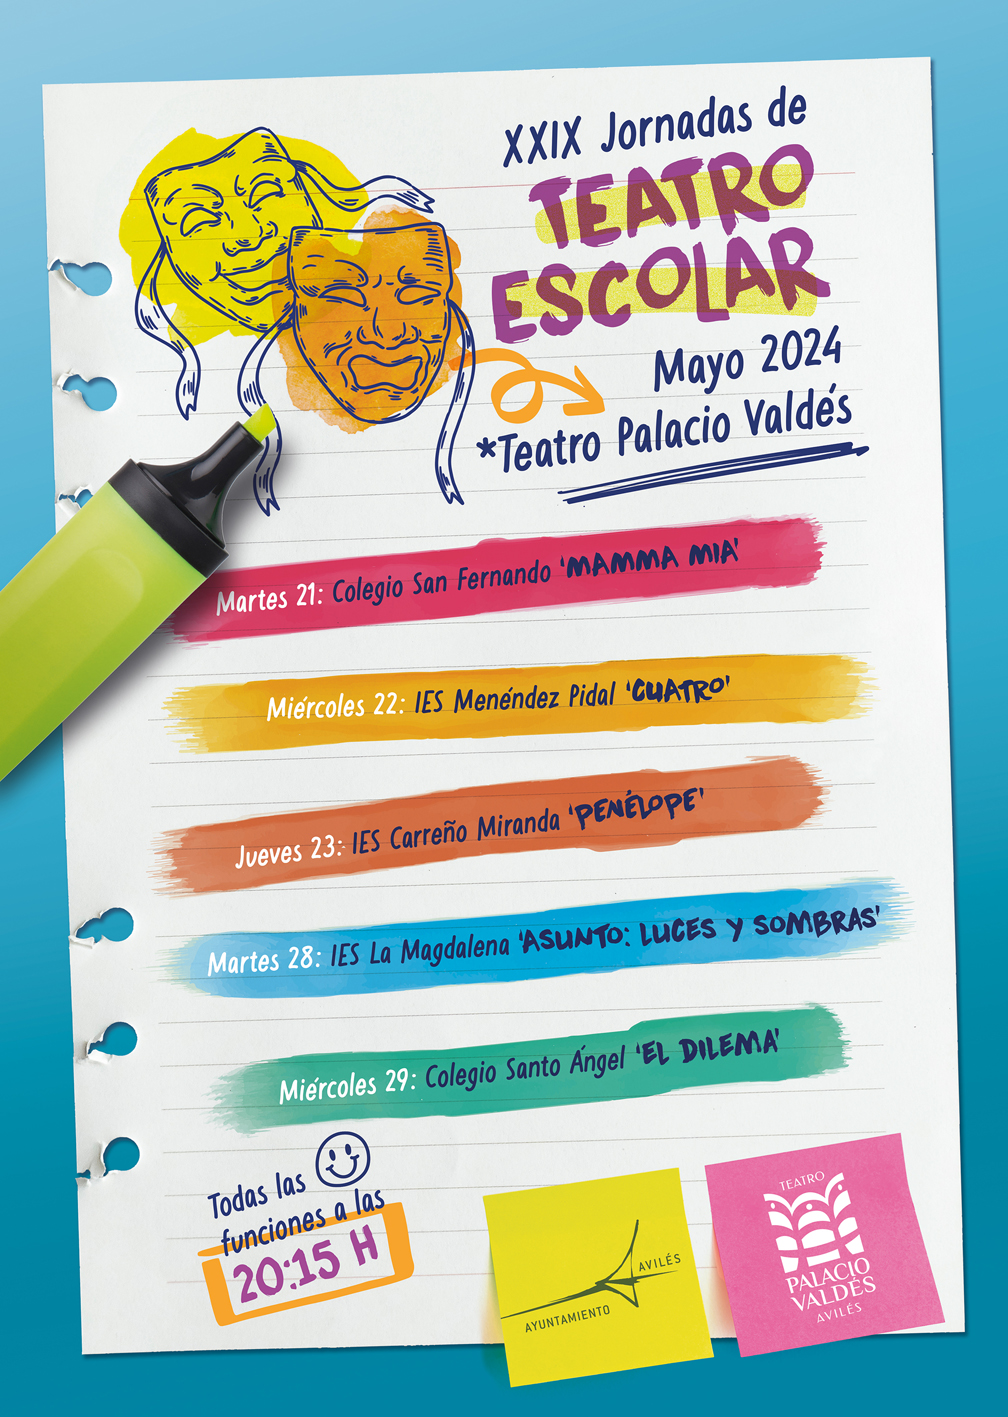 XXIX Jornadas de Teatro Escolar, mayo 2024